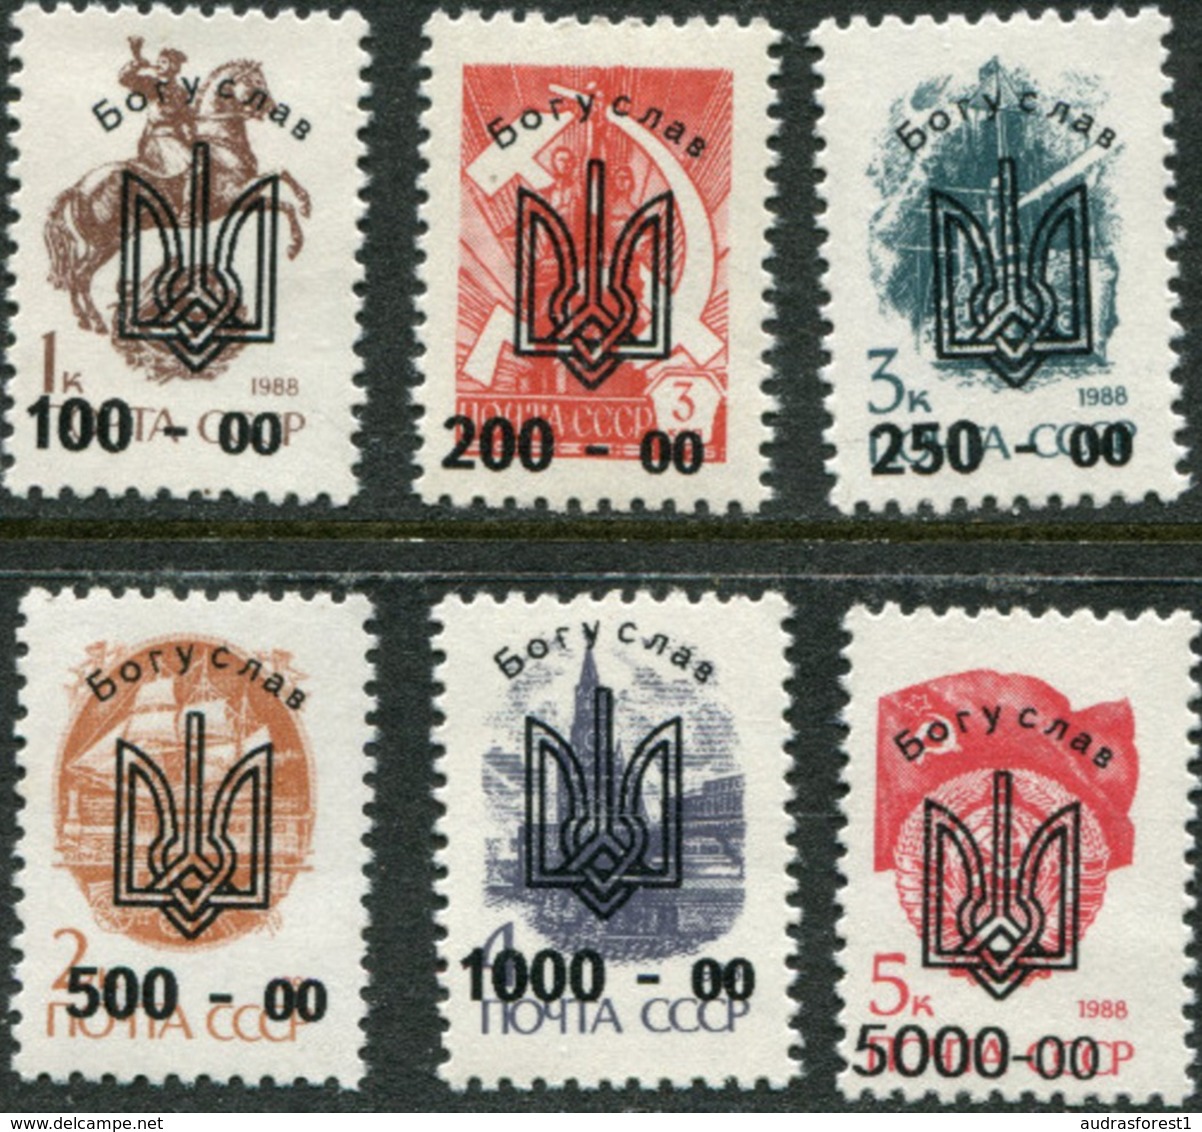 Bohuslav Trident Overprint On Small USSR Definitive  Mint Not Hinged Set Of 6 Issued In 1995 Ukraine Local Post - Ukraine